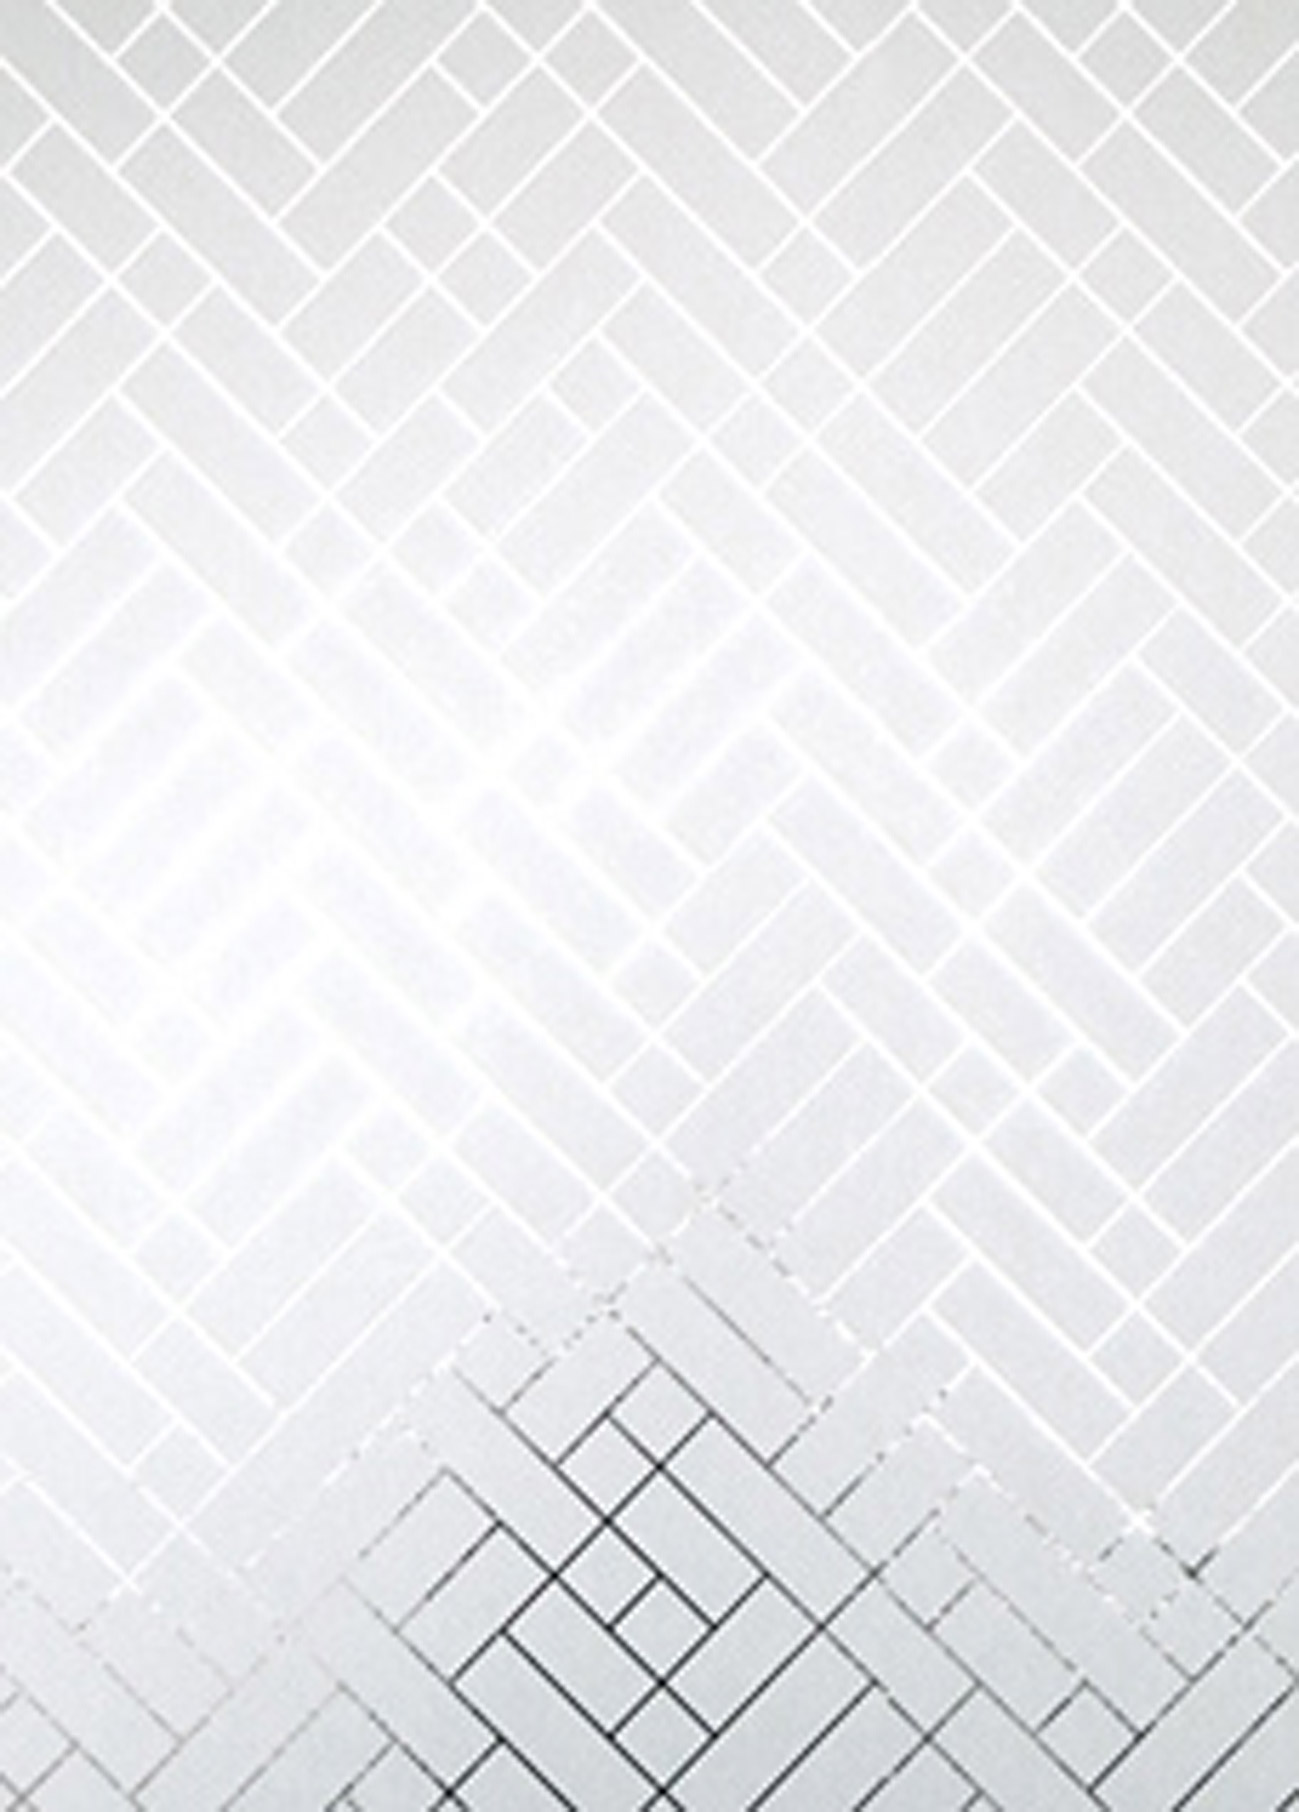 Silver Wallpaper Design Whitesilver wallpaper